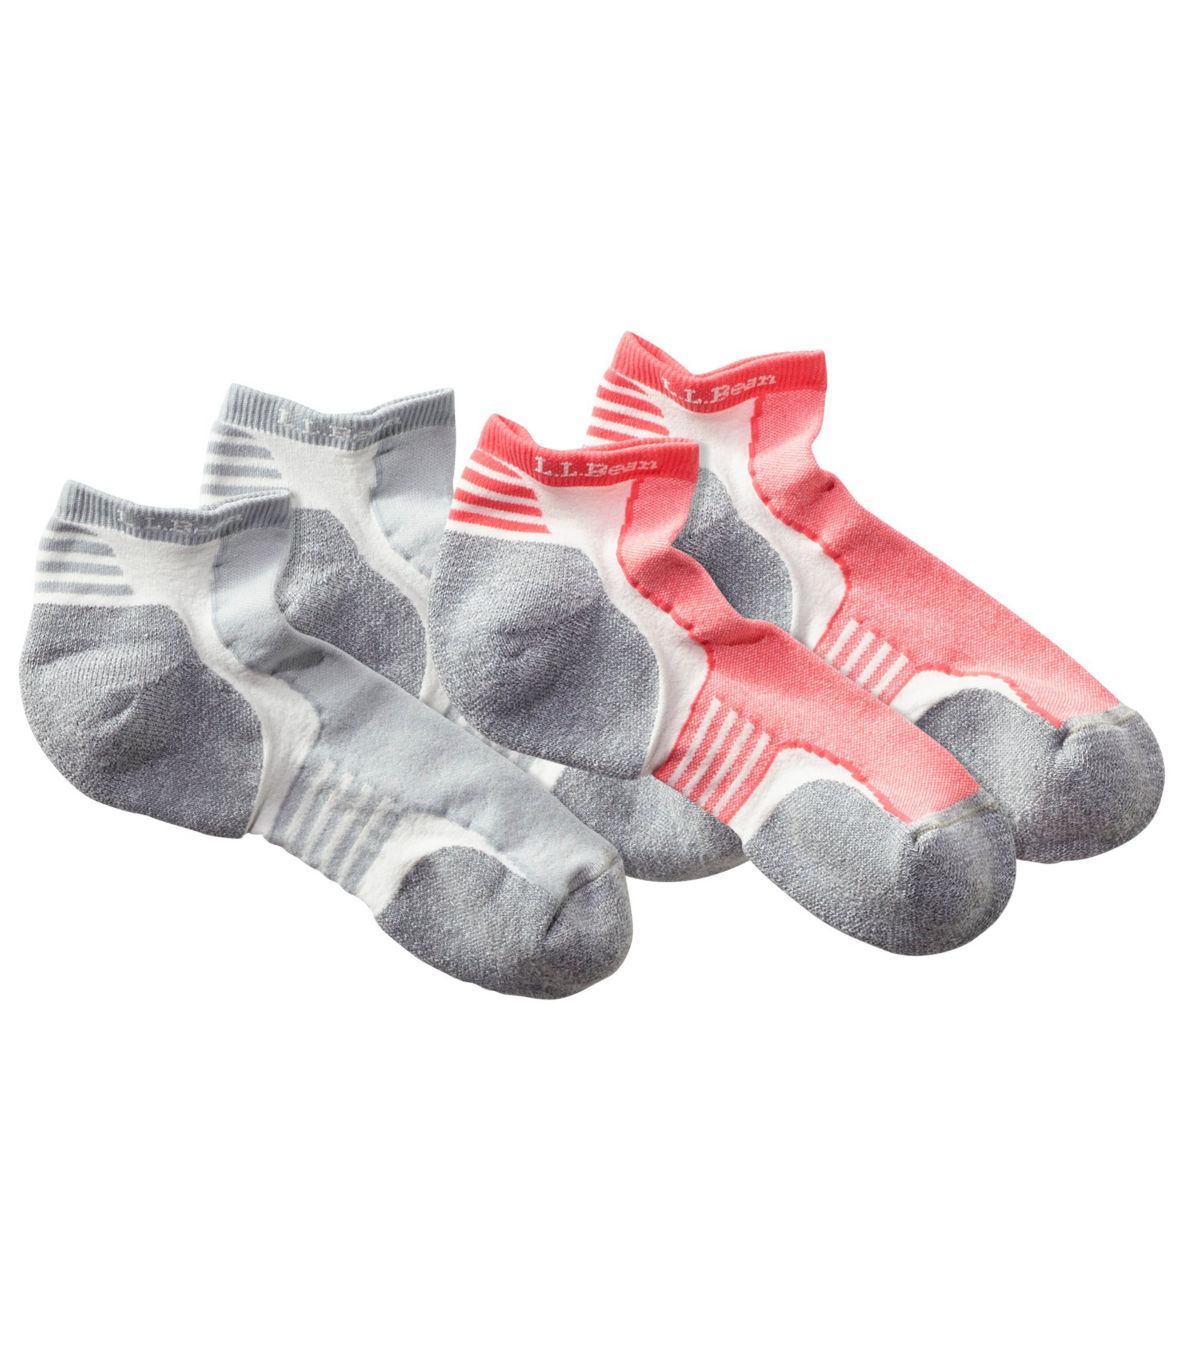 Women's Coolmax Nano Glide Multisport Socks, Two-Pack